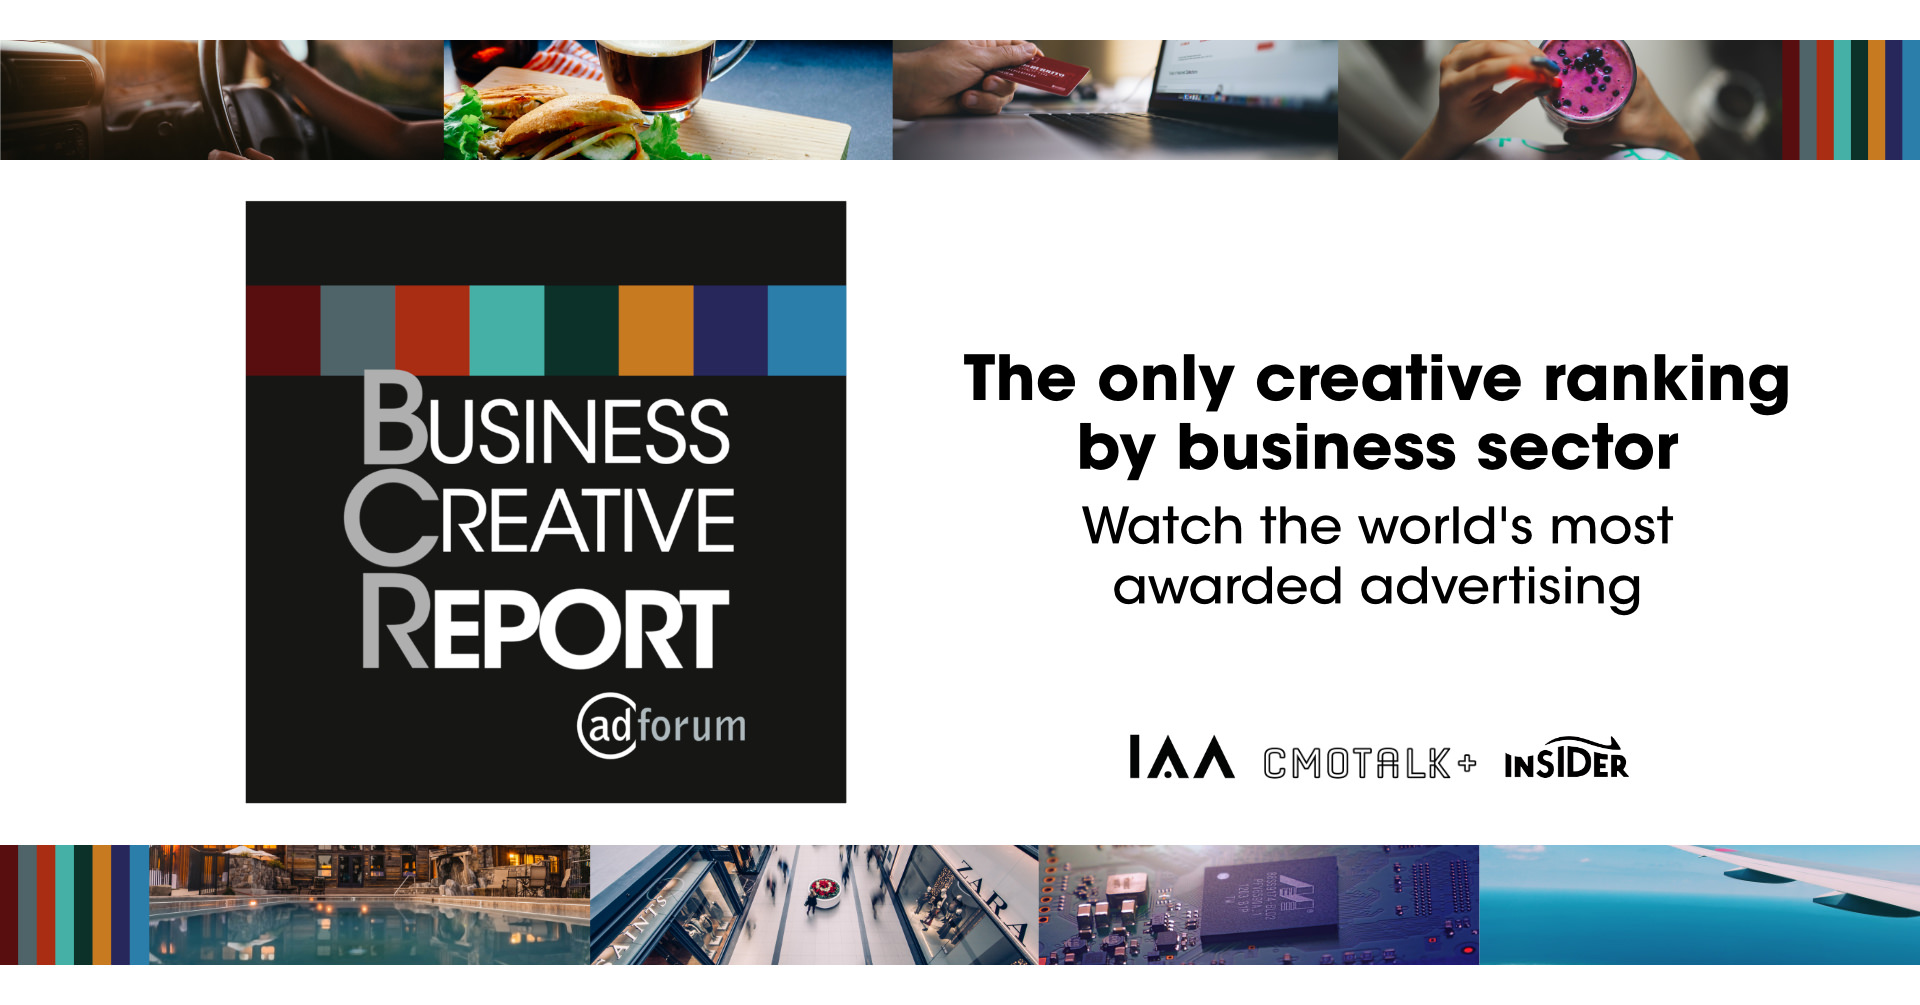  AdForum's Business Creative Report